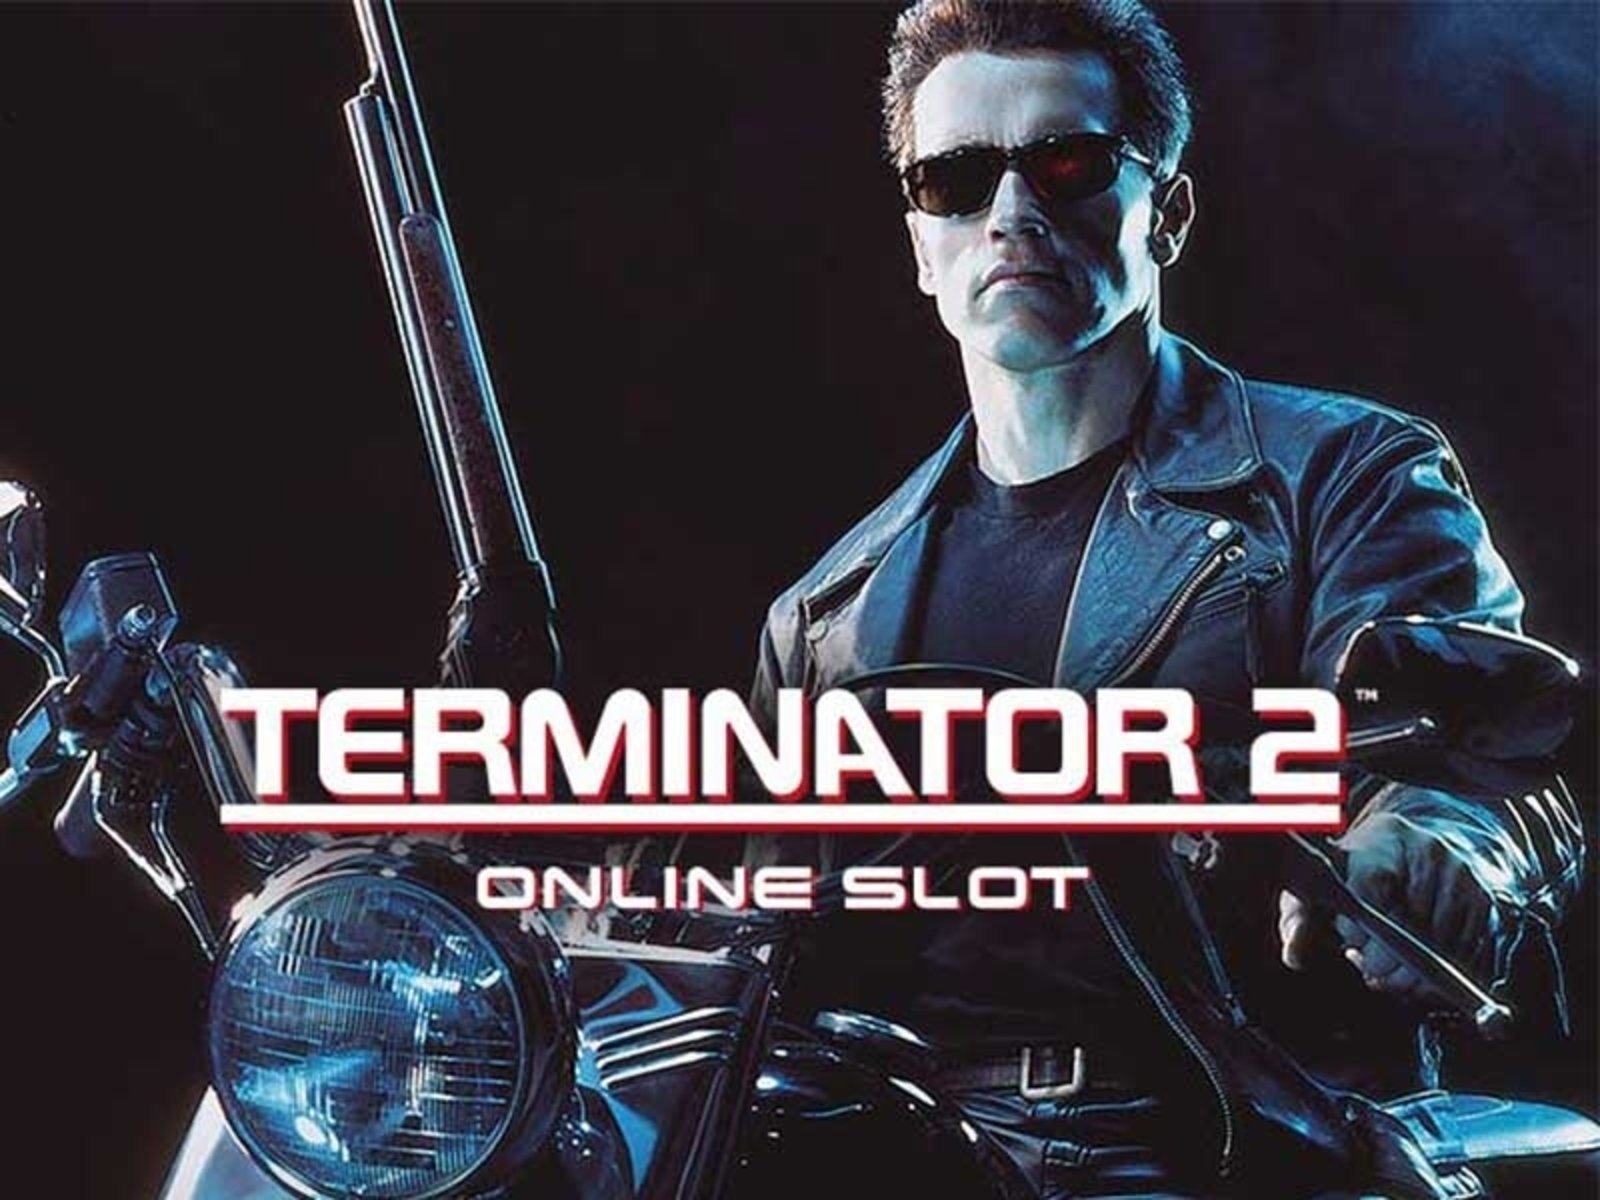 Terminator 2 demo